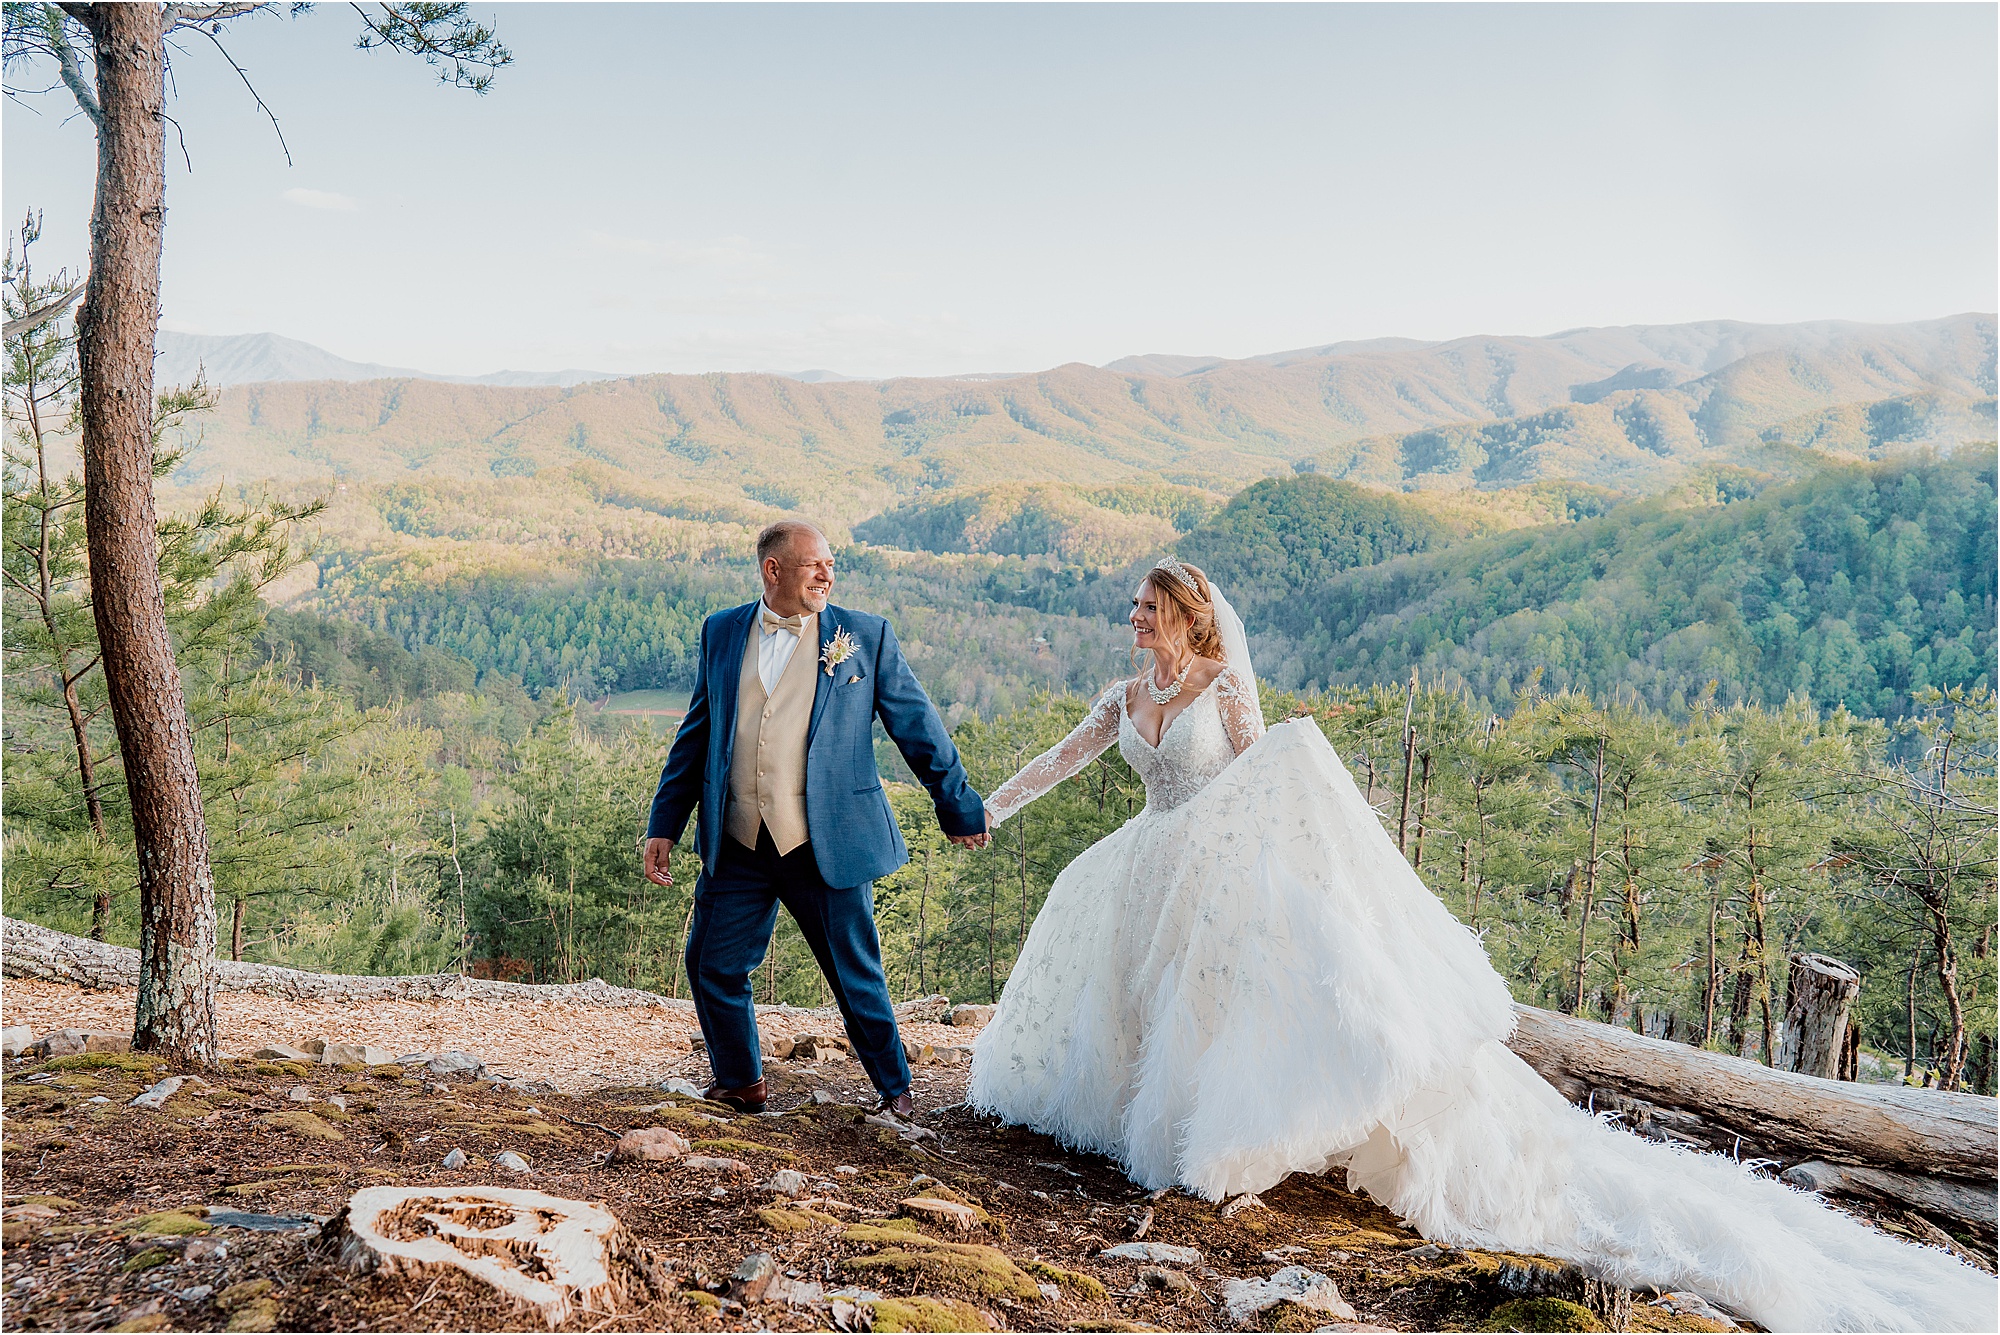 bride and groom walk across mountain in wedding attire